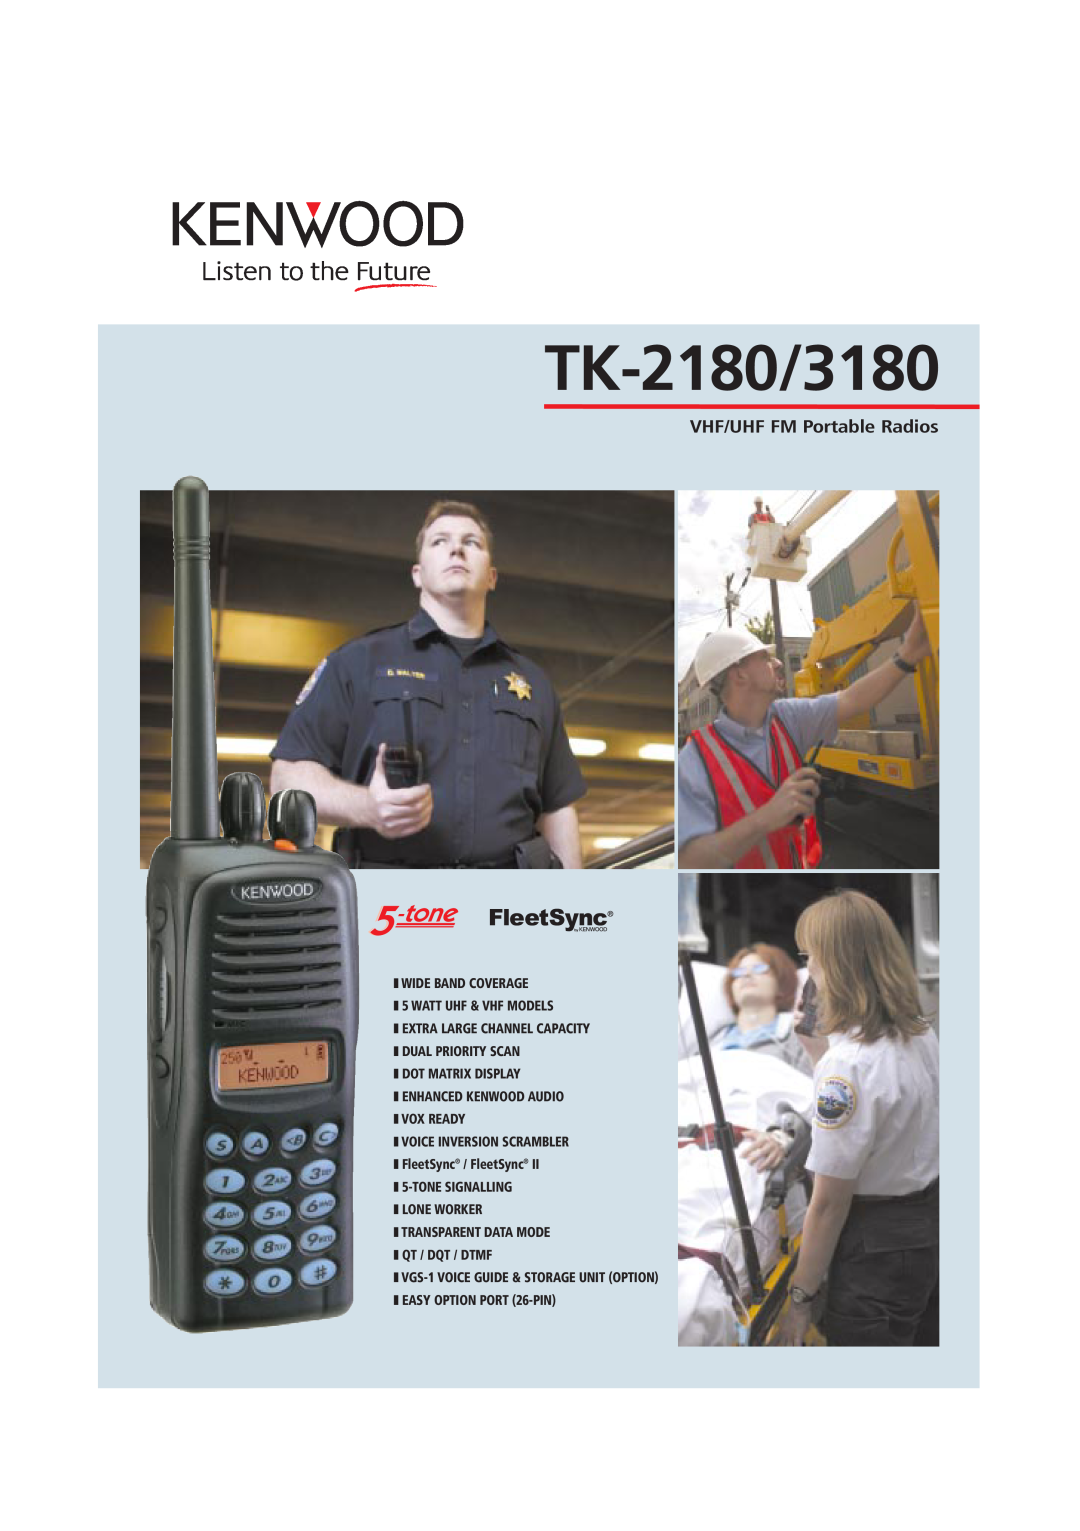 Kenwood TK-3180 manual TK-2180/3180, VHF/UHF FM Portable Radios, WIDE BAND COVERAGE 5 WATT UHF & VHF MODELS 